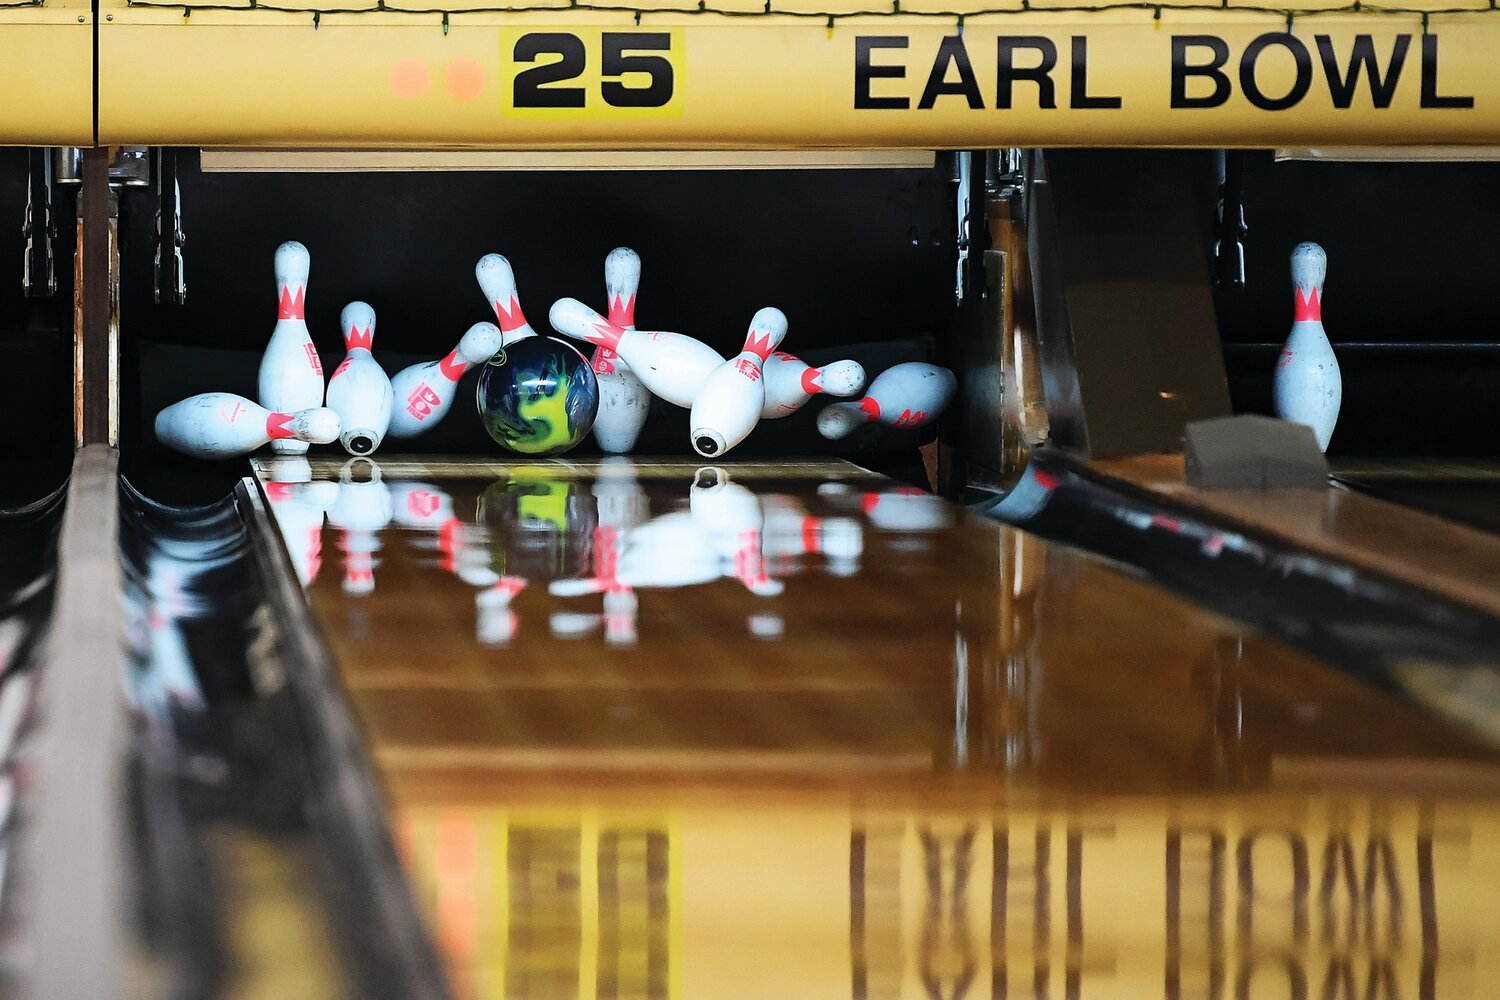 The pins come crashing down at Earl-Bowl Lanes on Jan. 22.